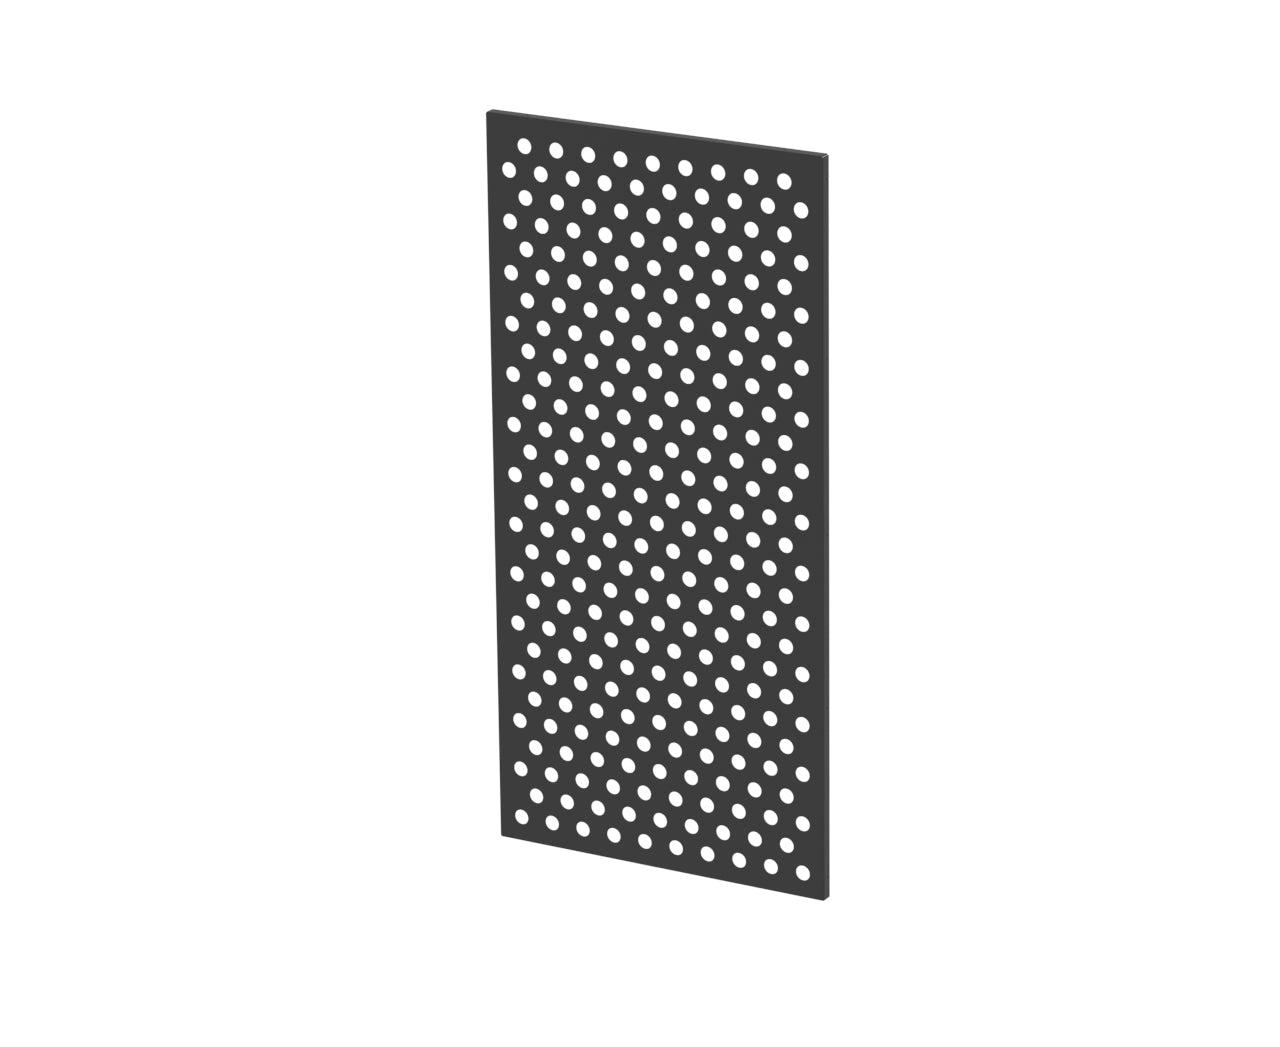 A Semi-Gloss Black Geometric Aluminum Decorative Panel